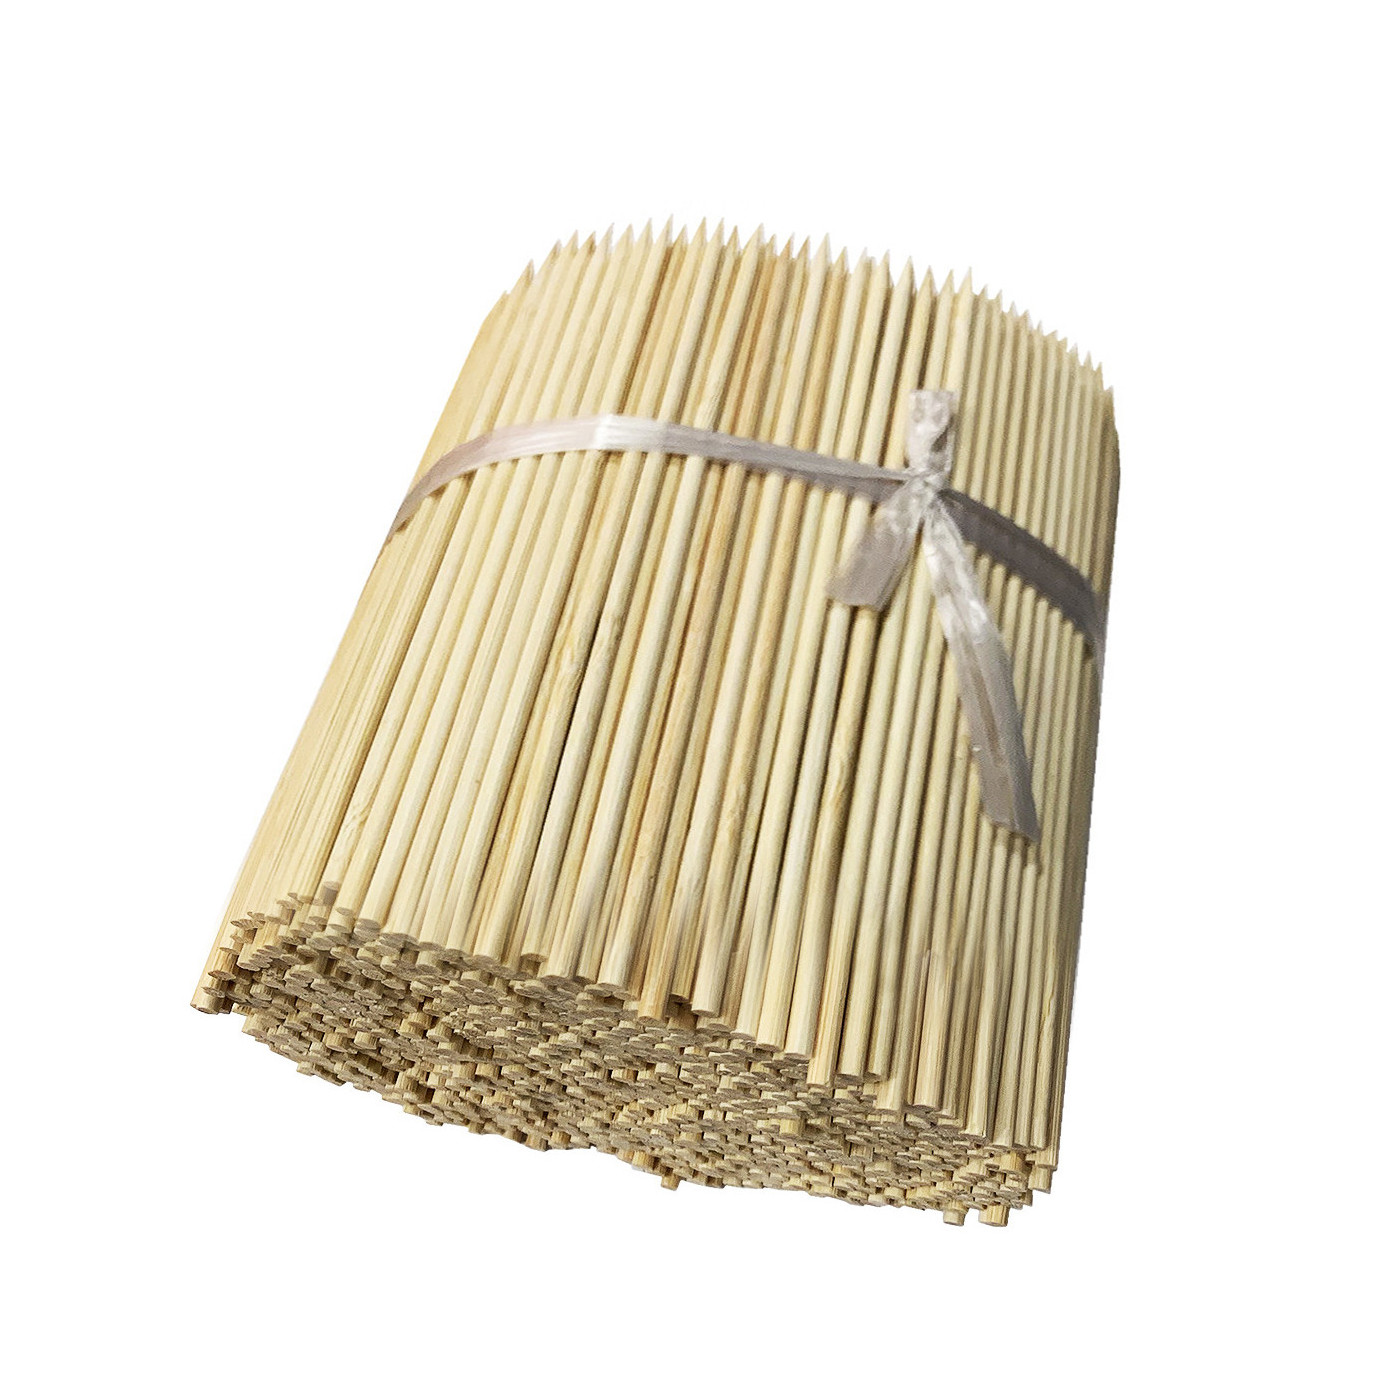 Set of 1000 bamboo sticks (4 mm x 18 cm)